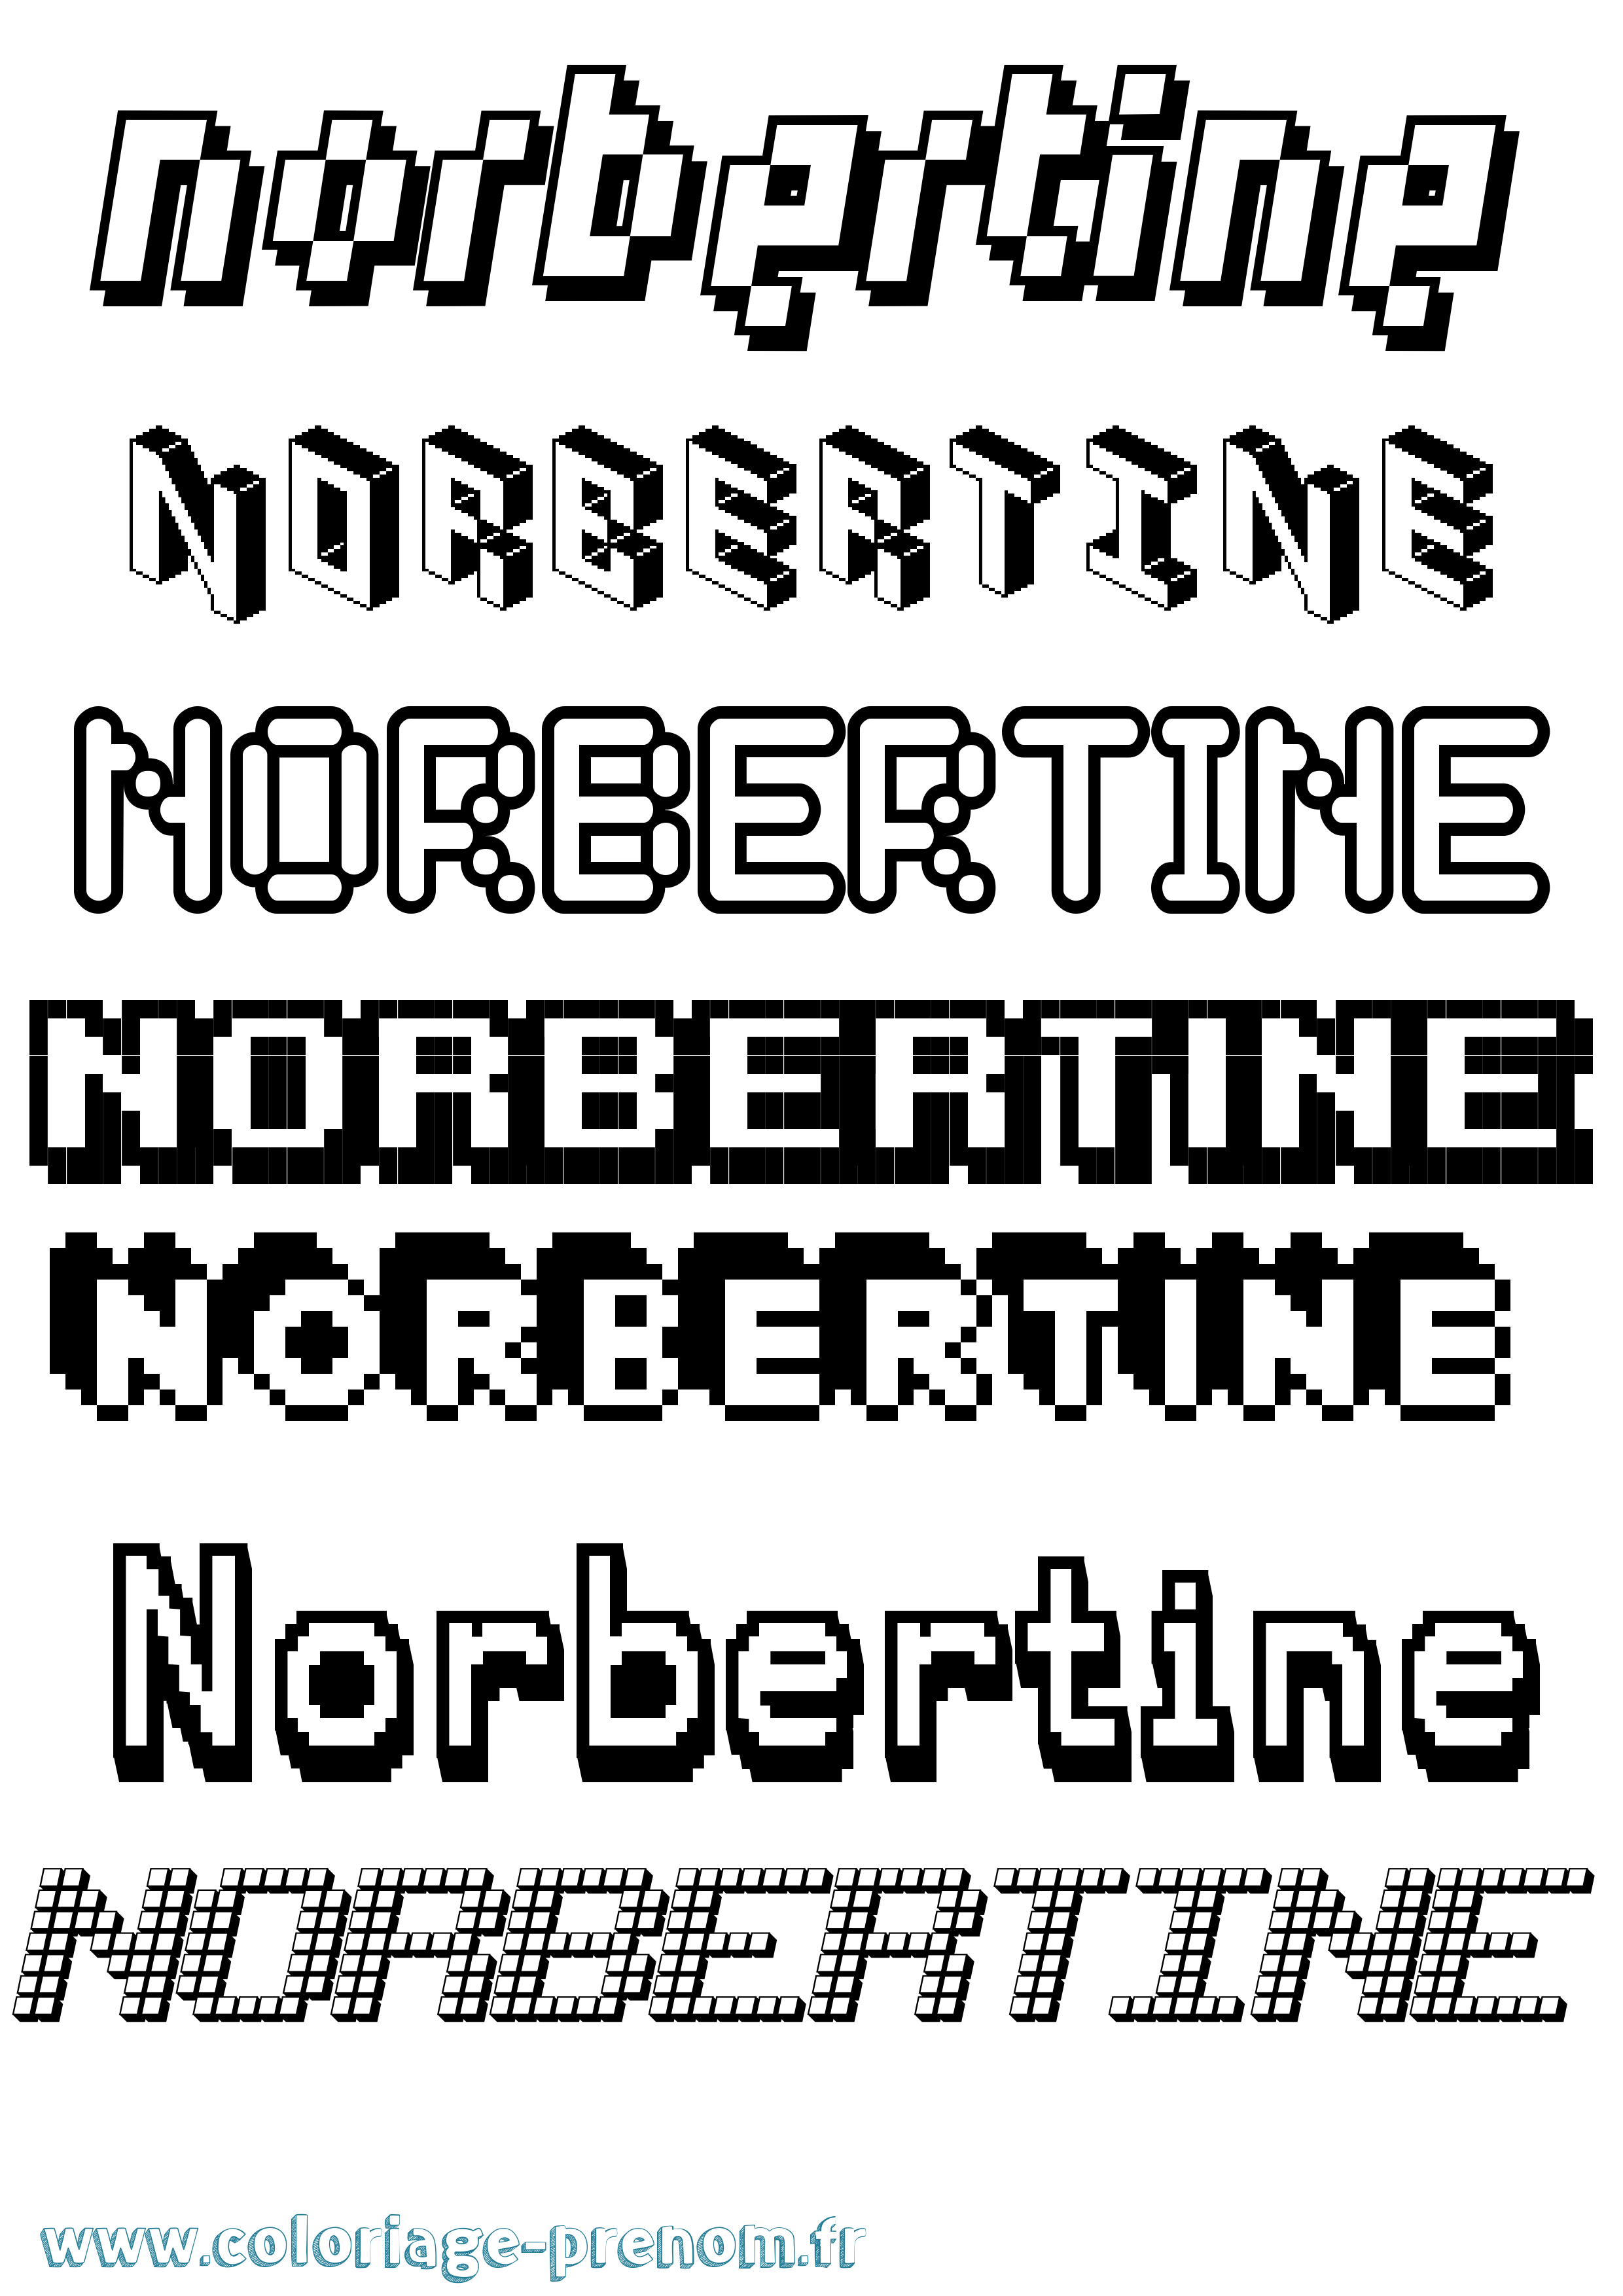 Coloriage prénom Norbertine Pixel